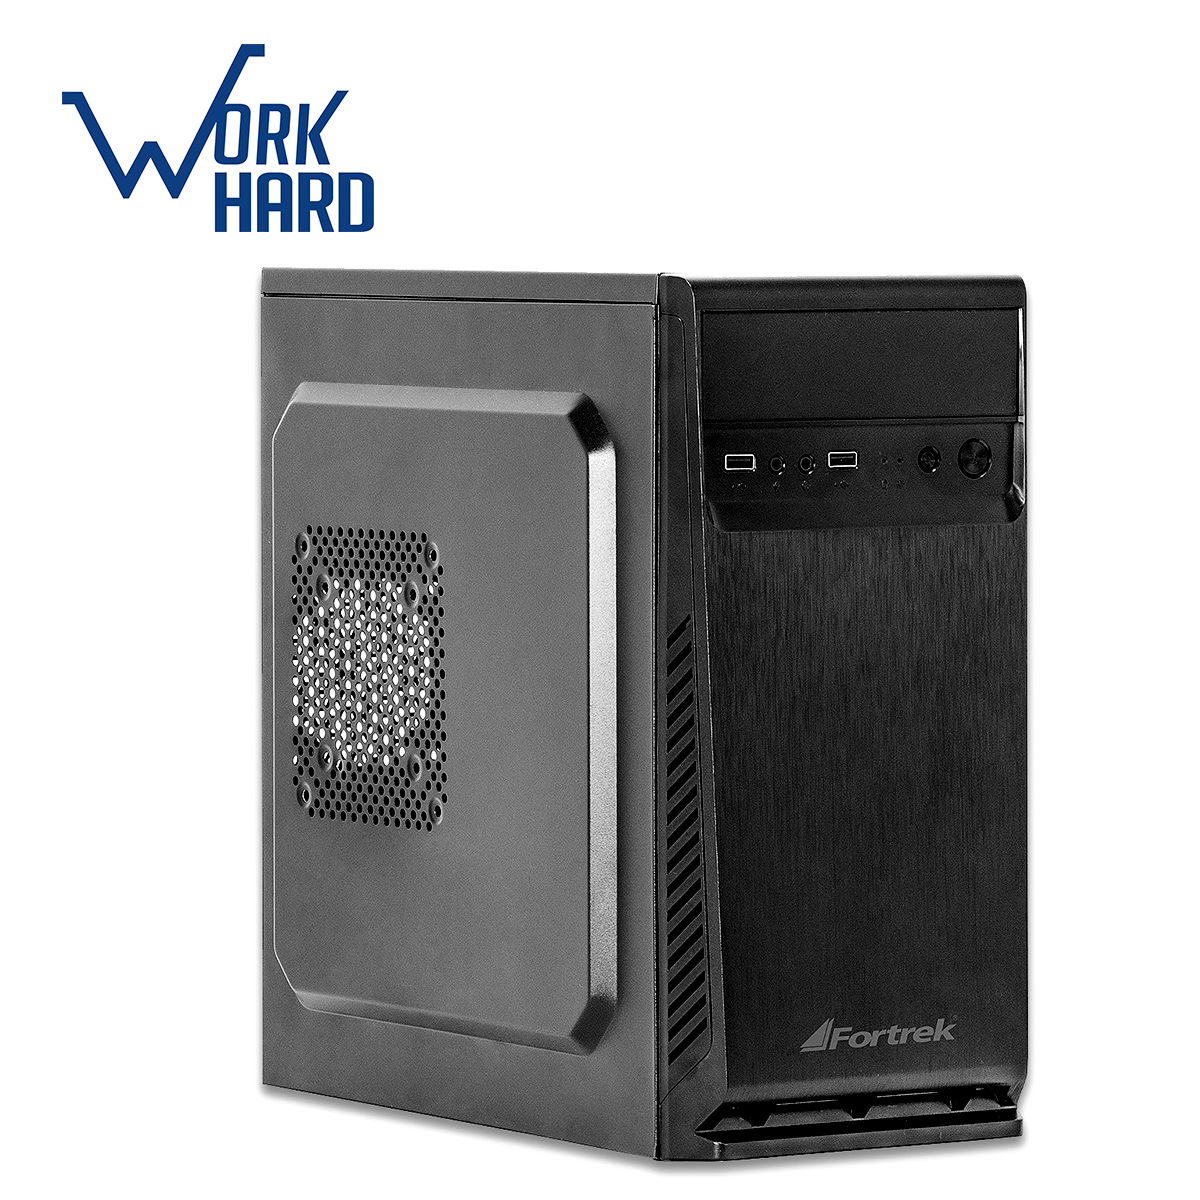 Computador Bits WorkHard - AMD FX-4300 Quad Core, 8GB (2x4GB), SSD 240GB, FreeDos - 2 Anos de garantia